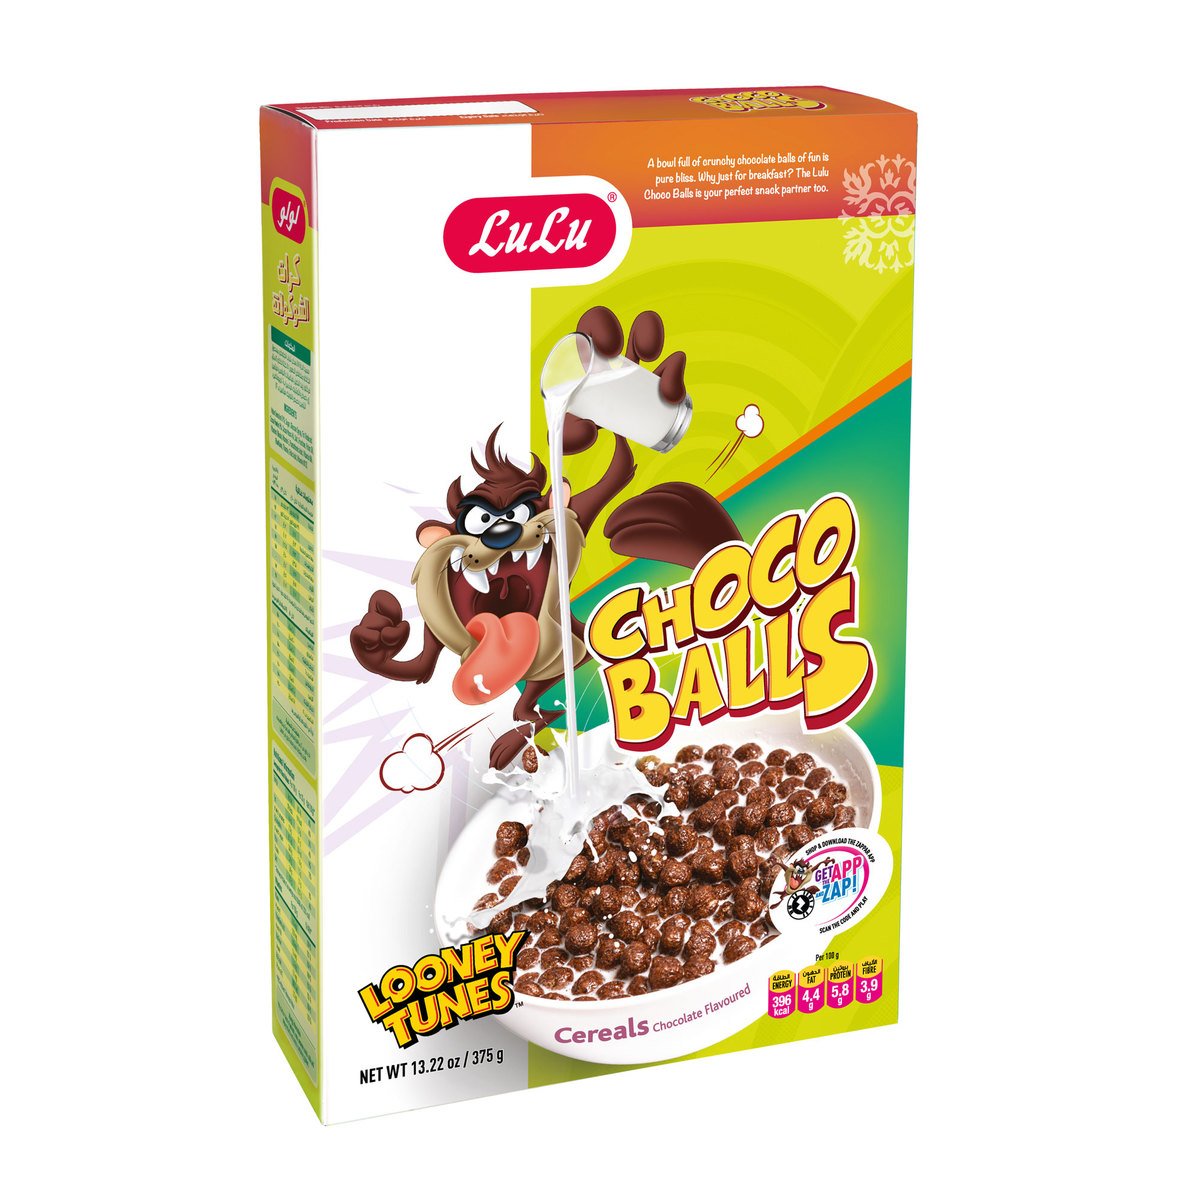 LuLu Choco Balls Cereal 375 g